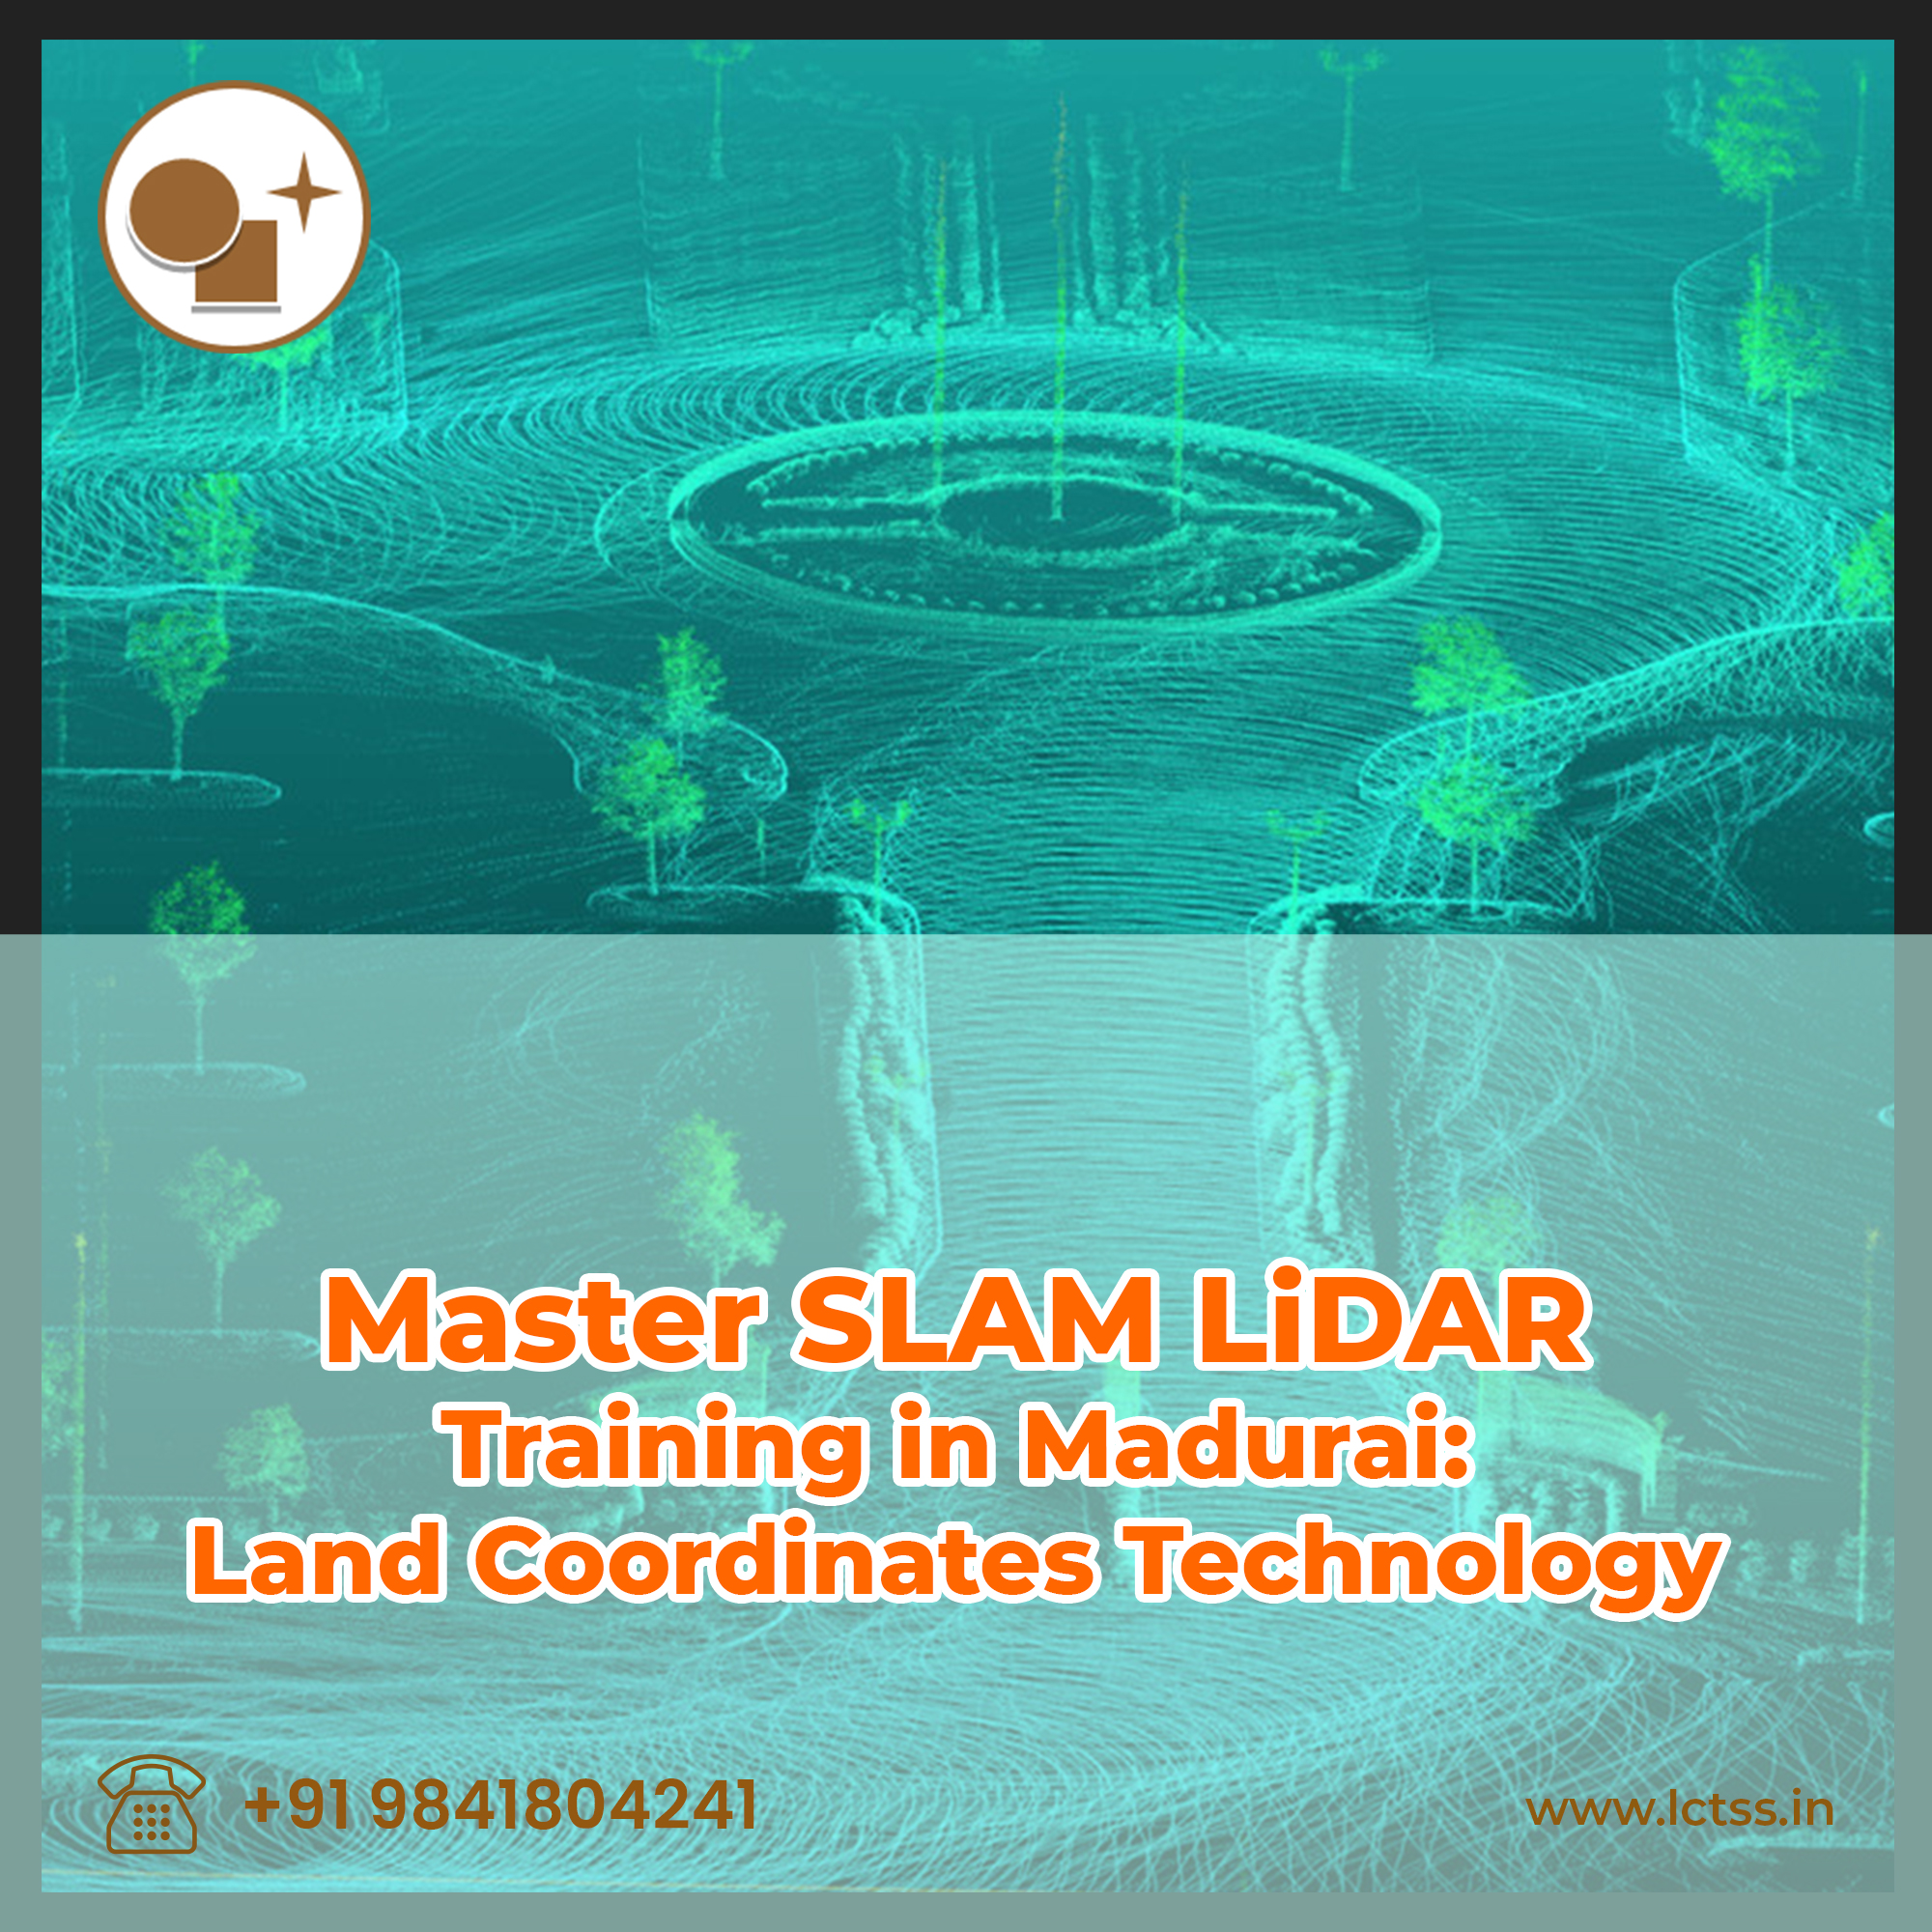 Master SLAM LiDAR Training in Madurai: Land Coordinates Technology